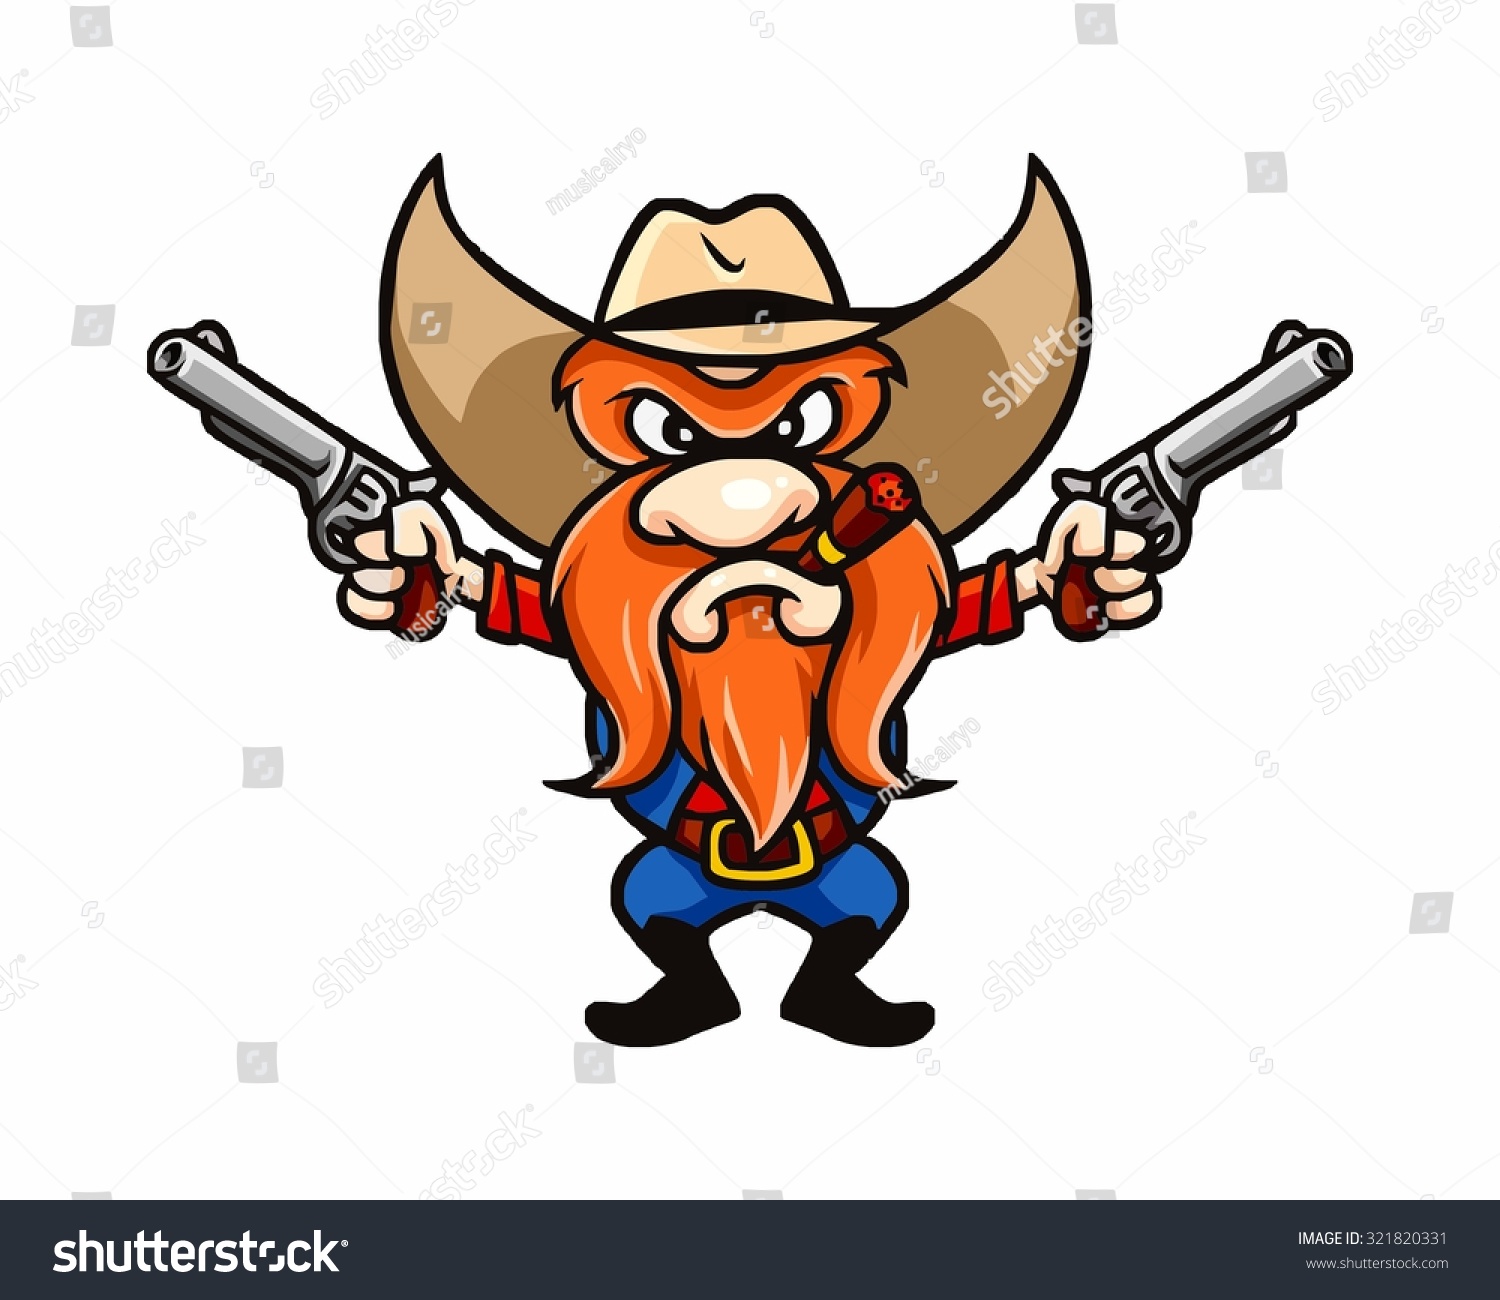 Angry Sheriff Bandit Robber West Cowboy: เวกเตอร์สต็อก (ปลอดค่า